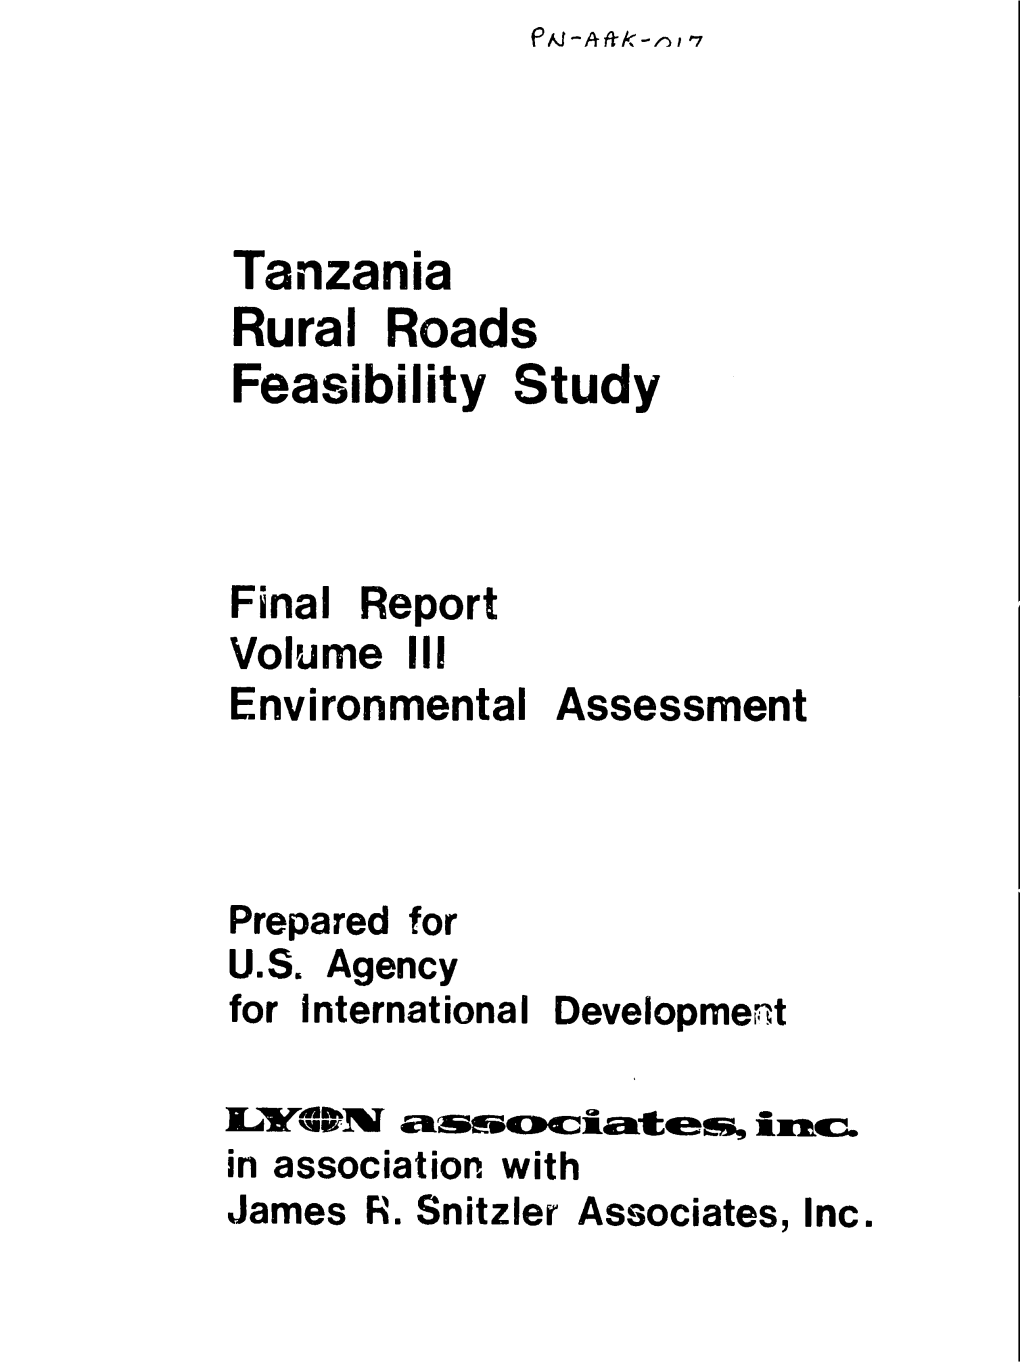 Tanzania Rural Roads Feasibility Study